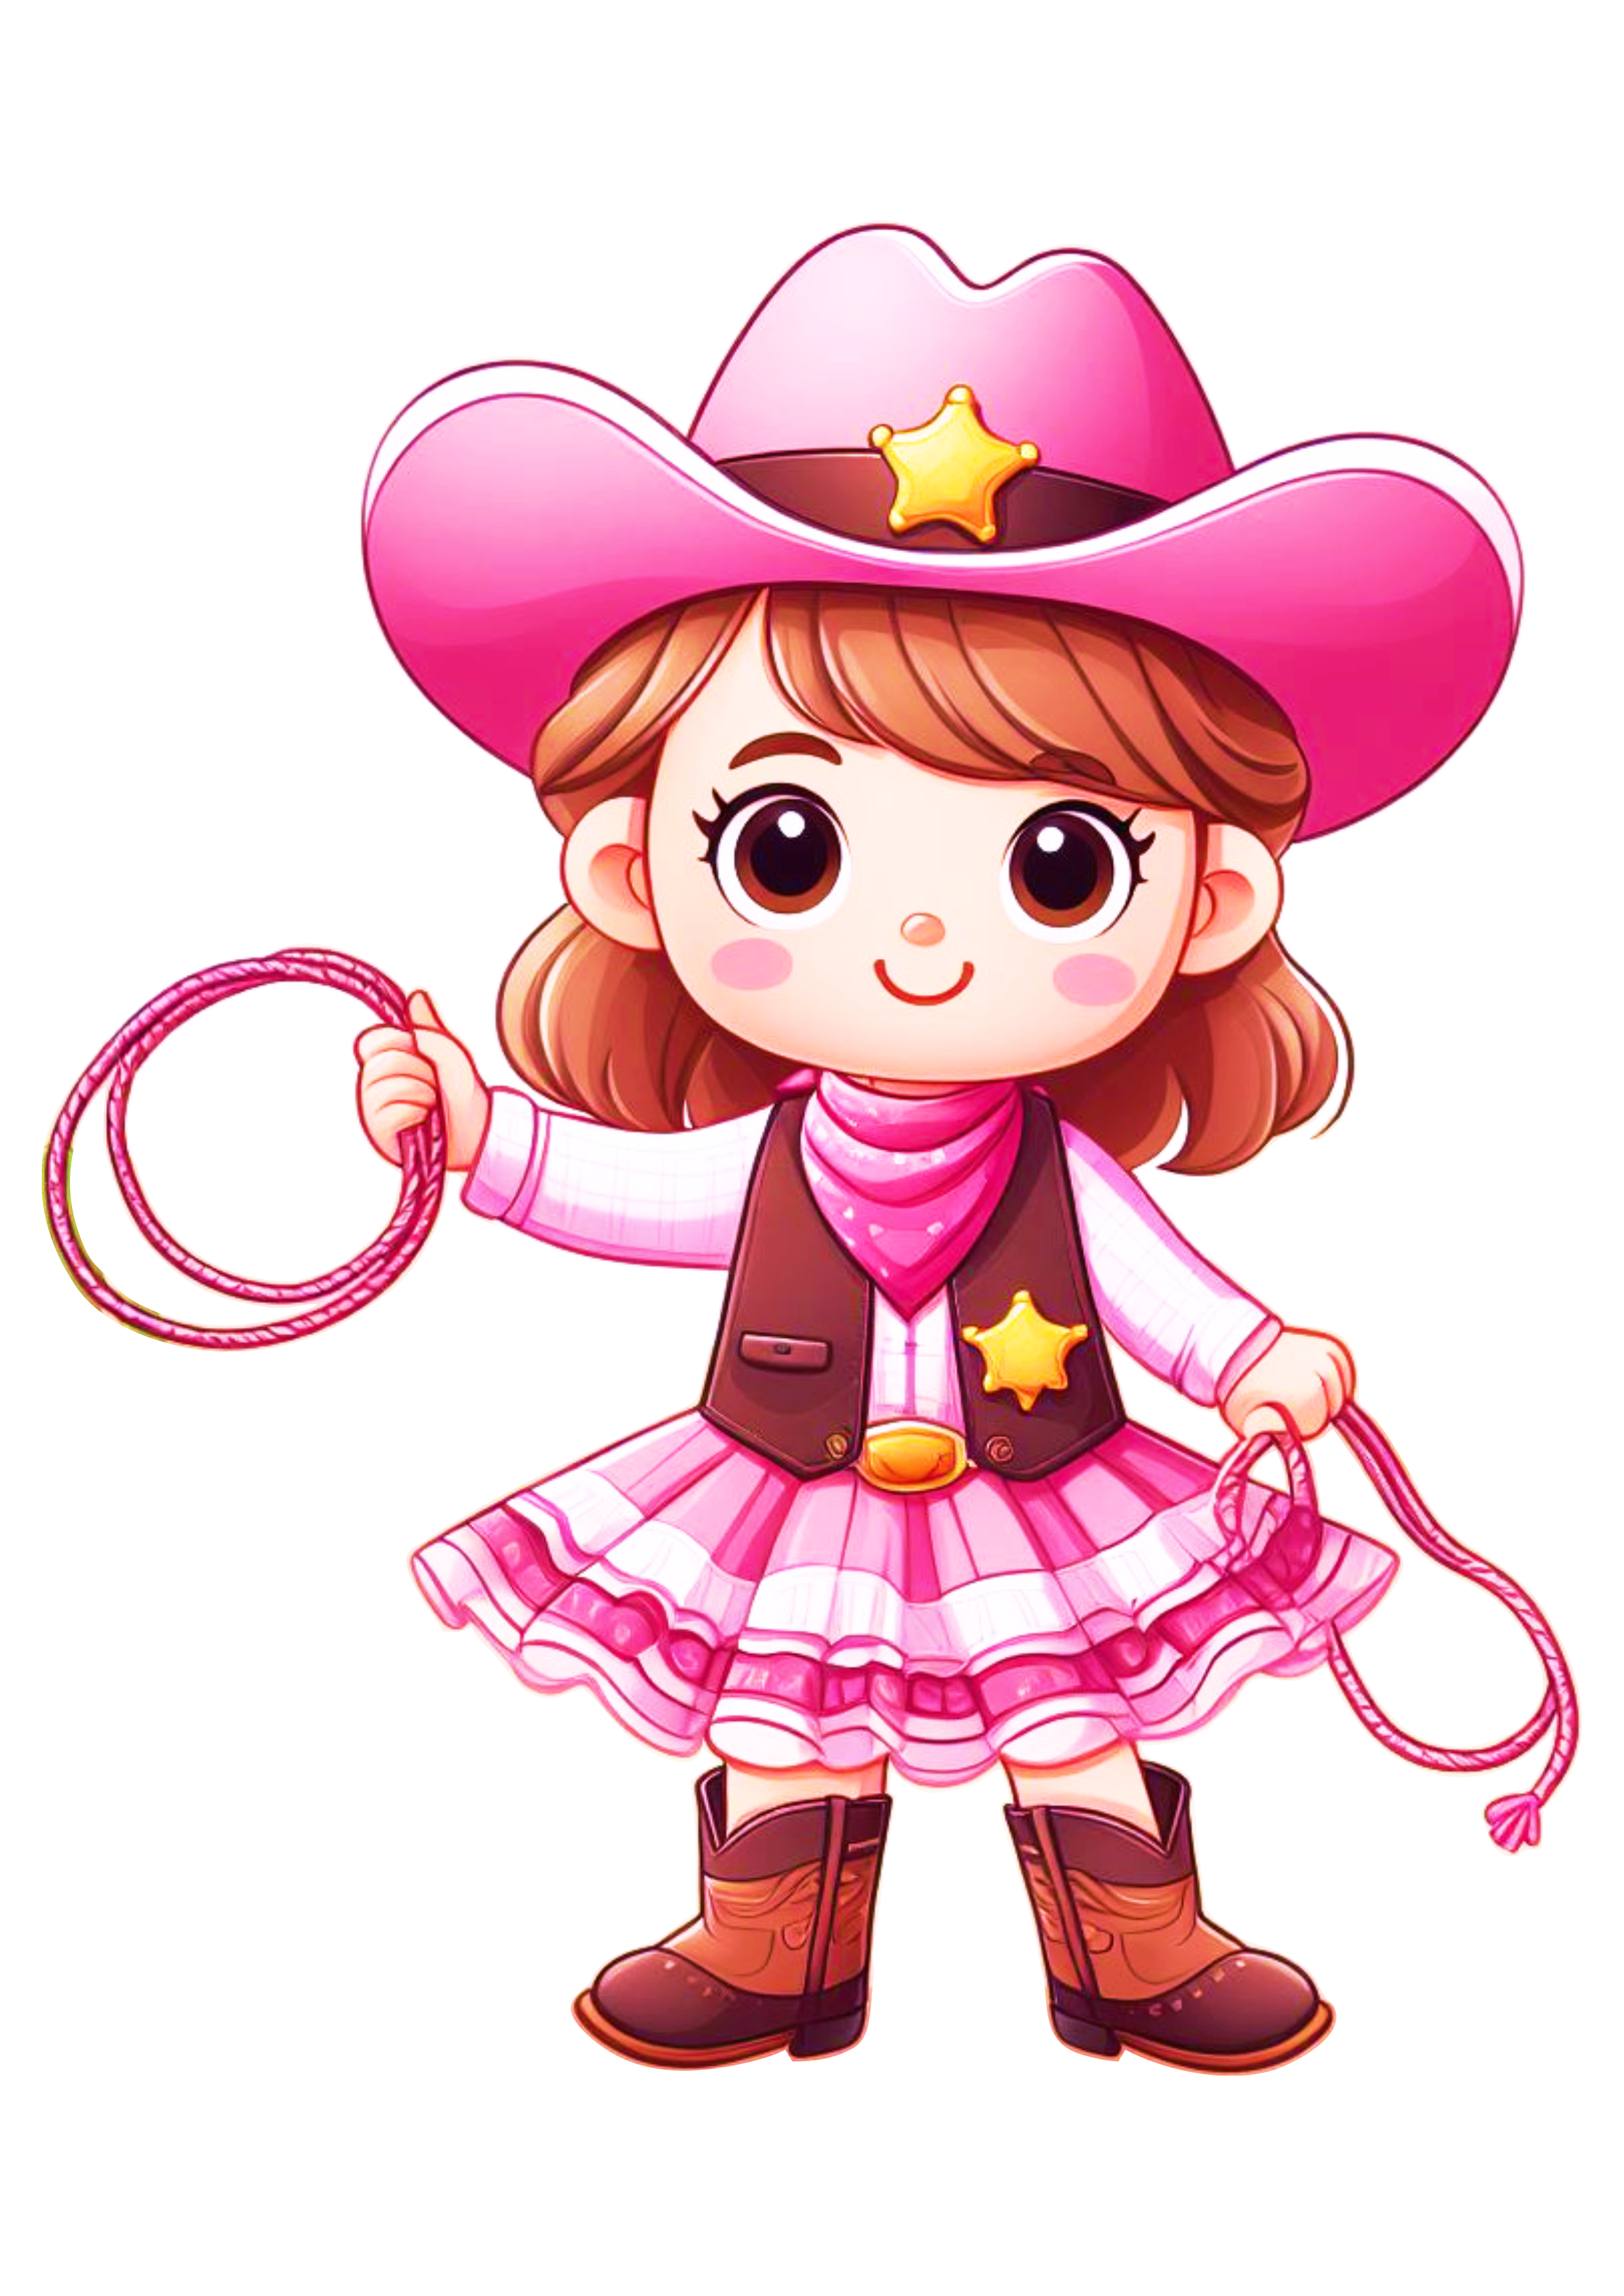 Cowboy desenho simples menina cabelo curto com fantasia rosa cowgirl xerife png